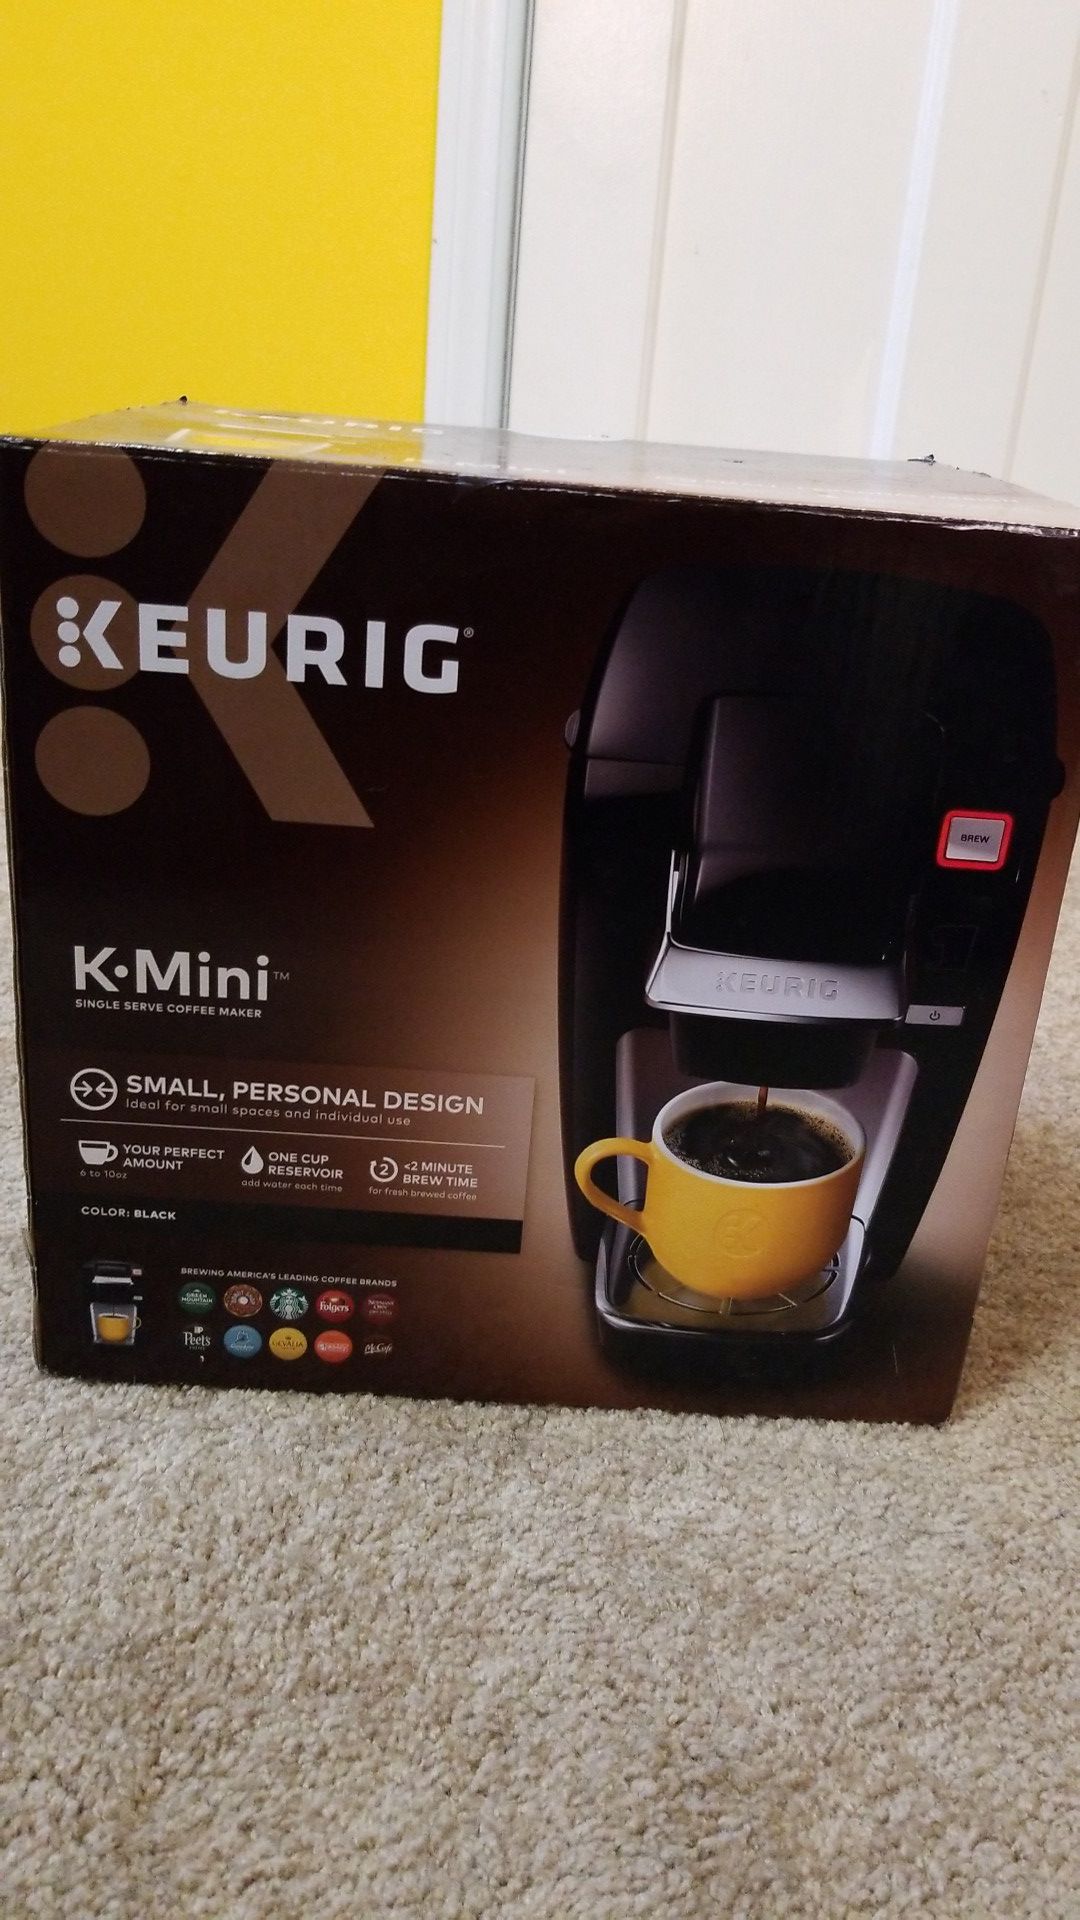 Keuring K-mini single serve coffee maker